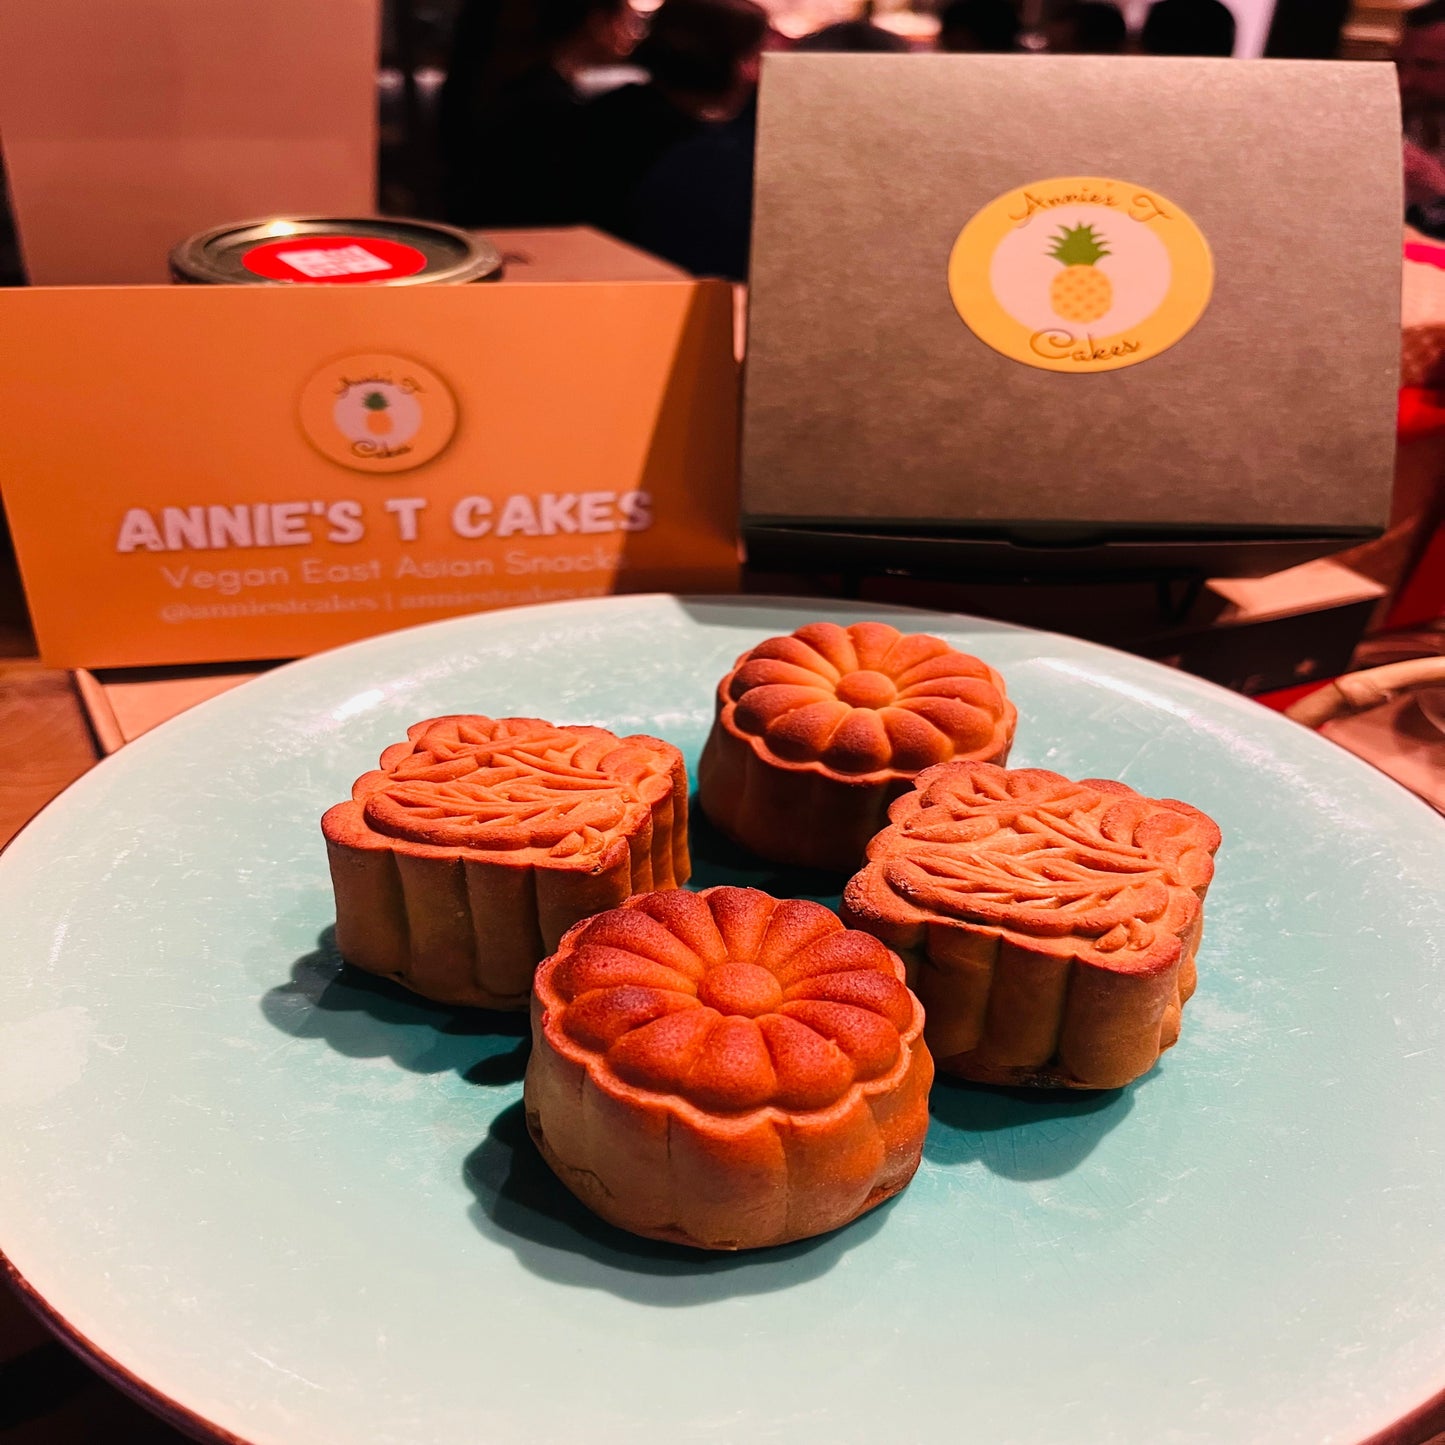 Annie's T Cakes